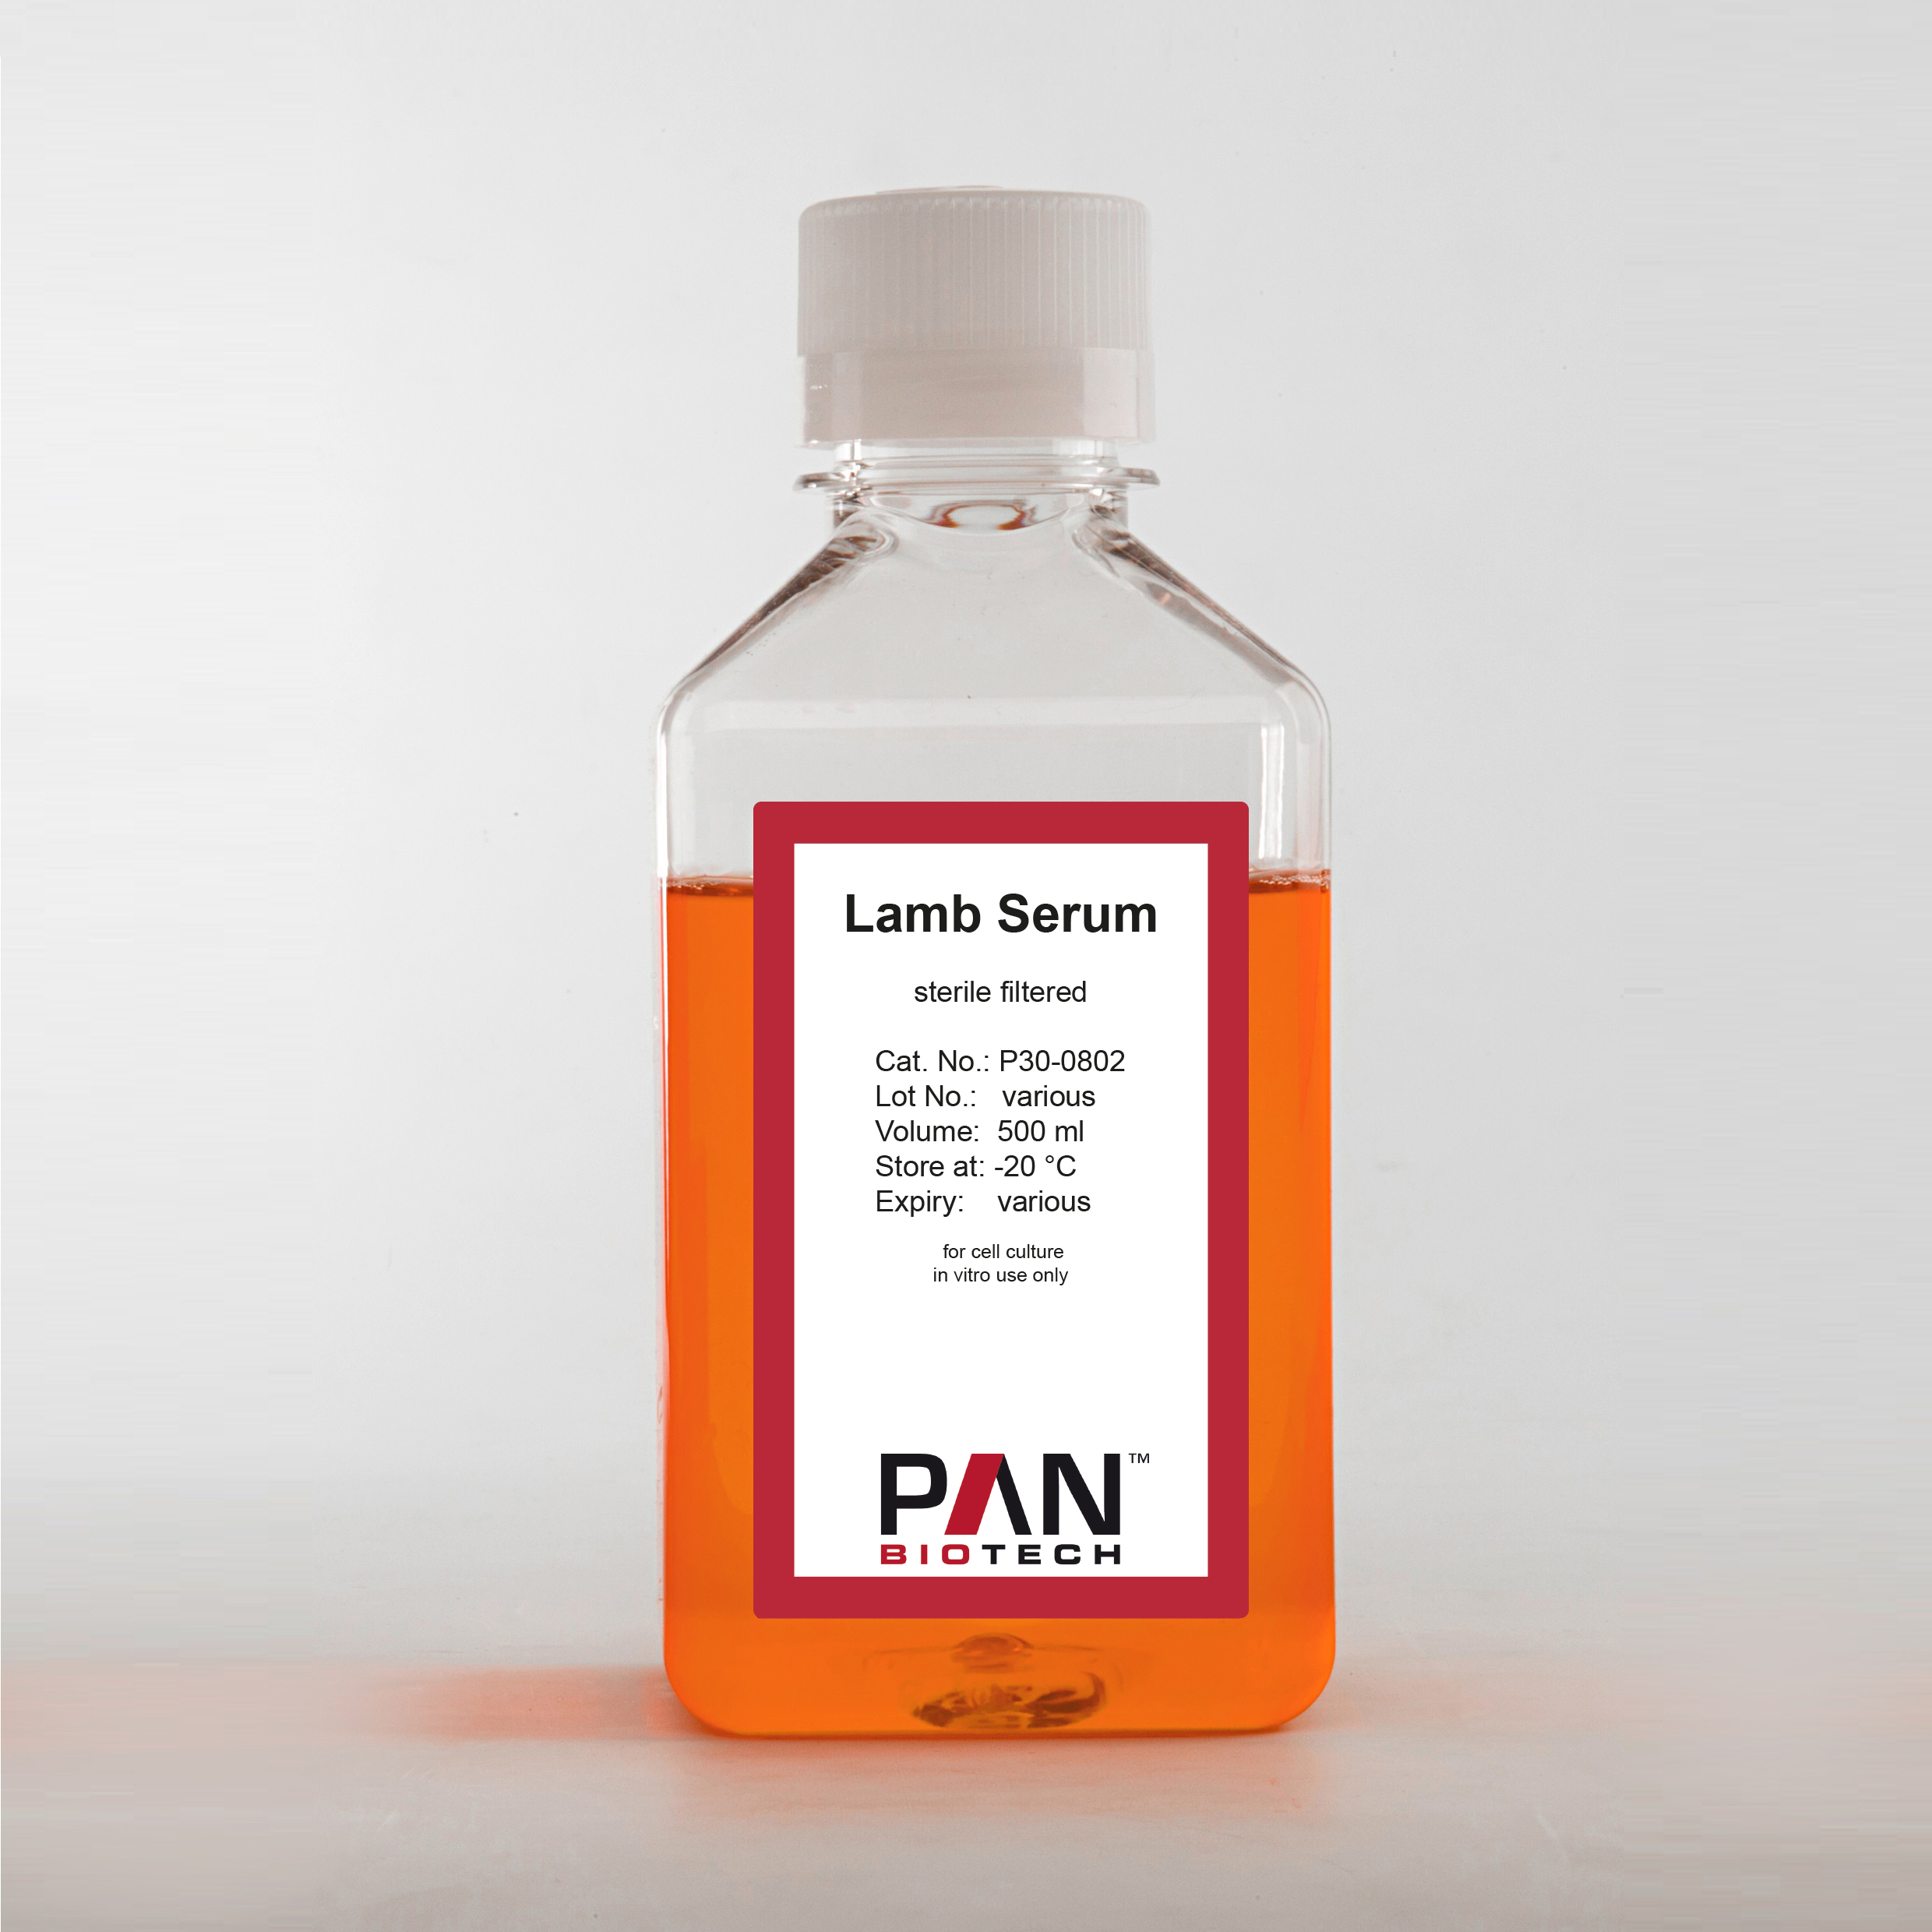 Lamb Serum, sterile filtered